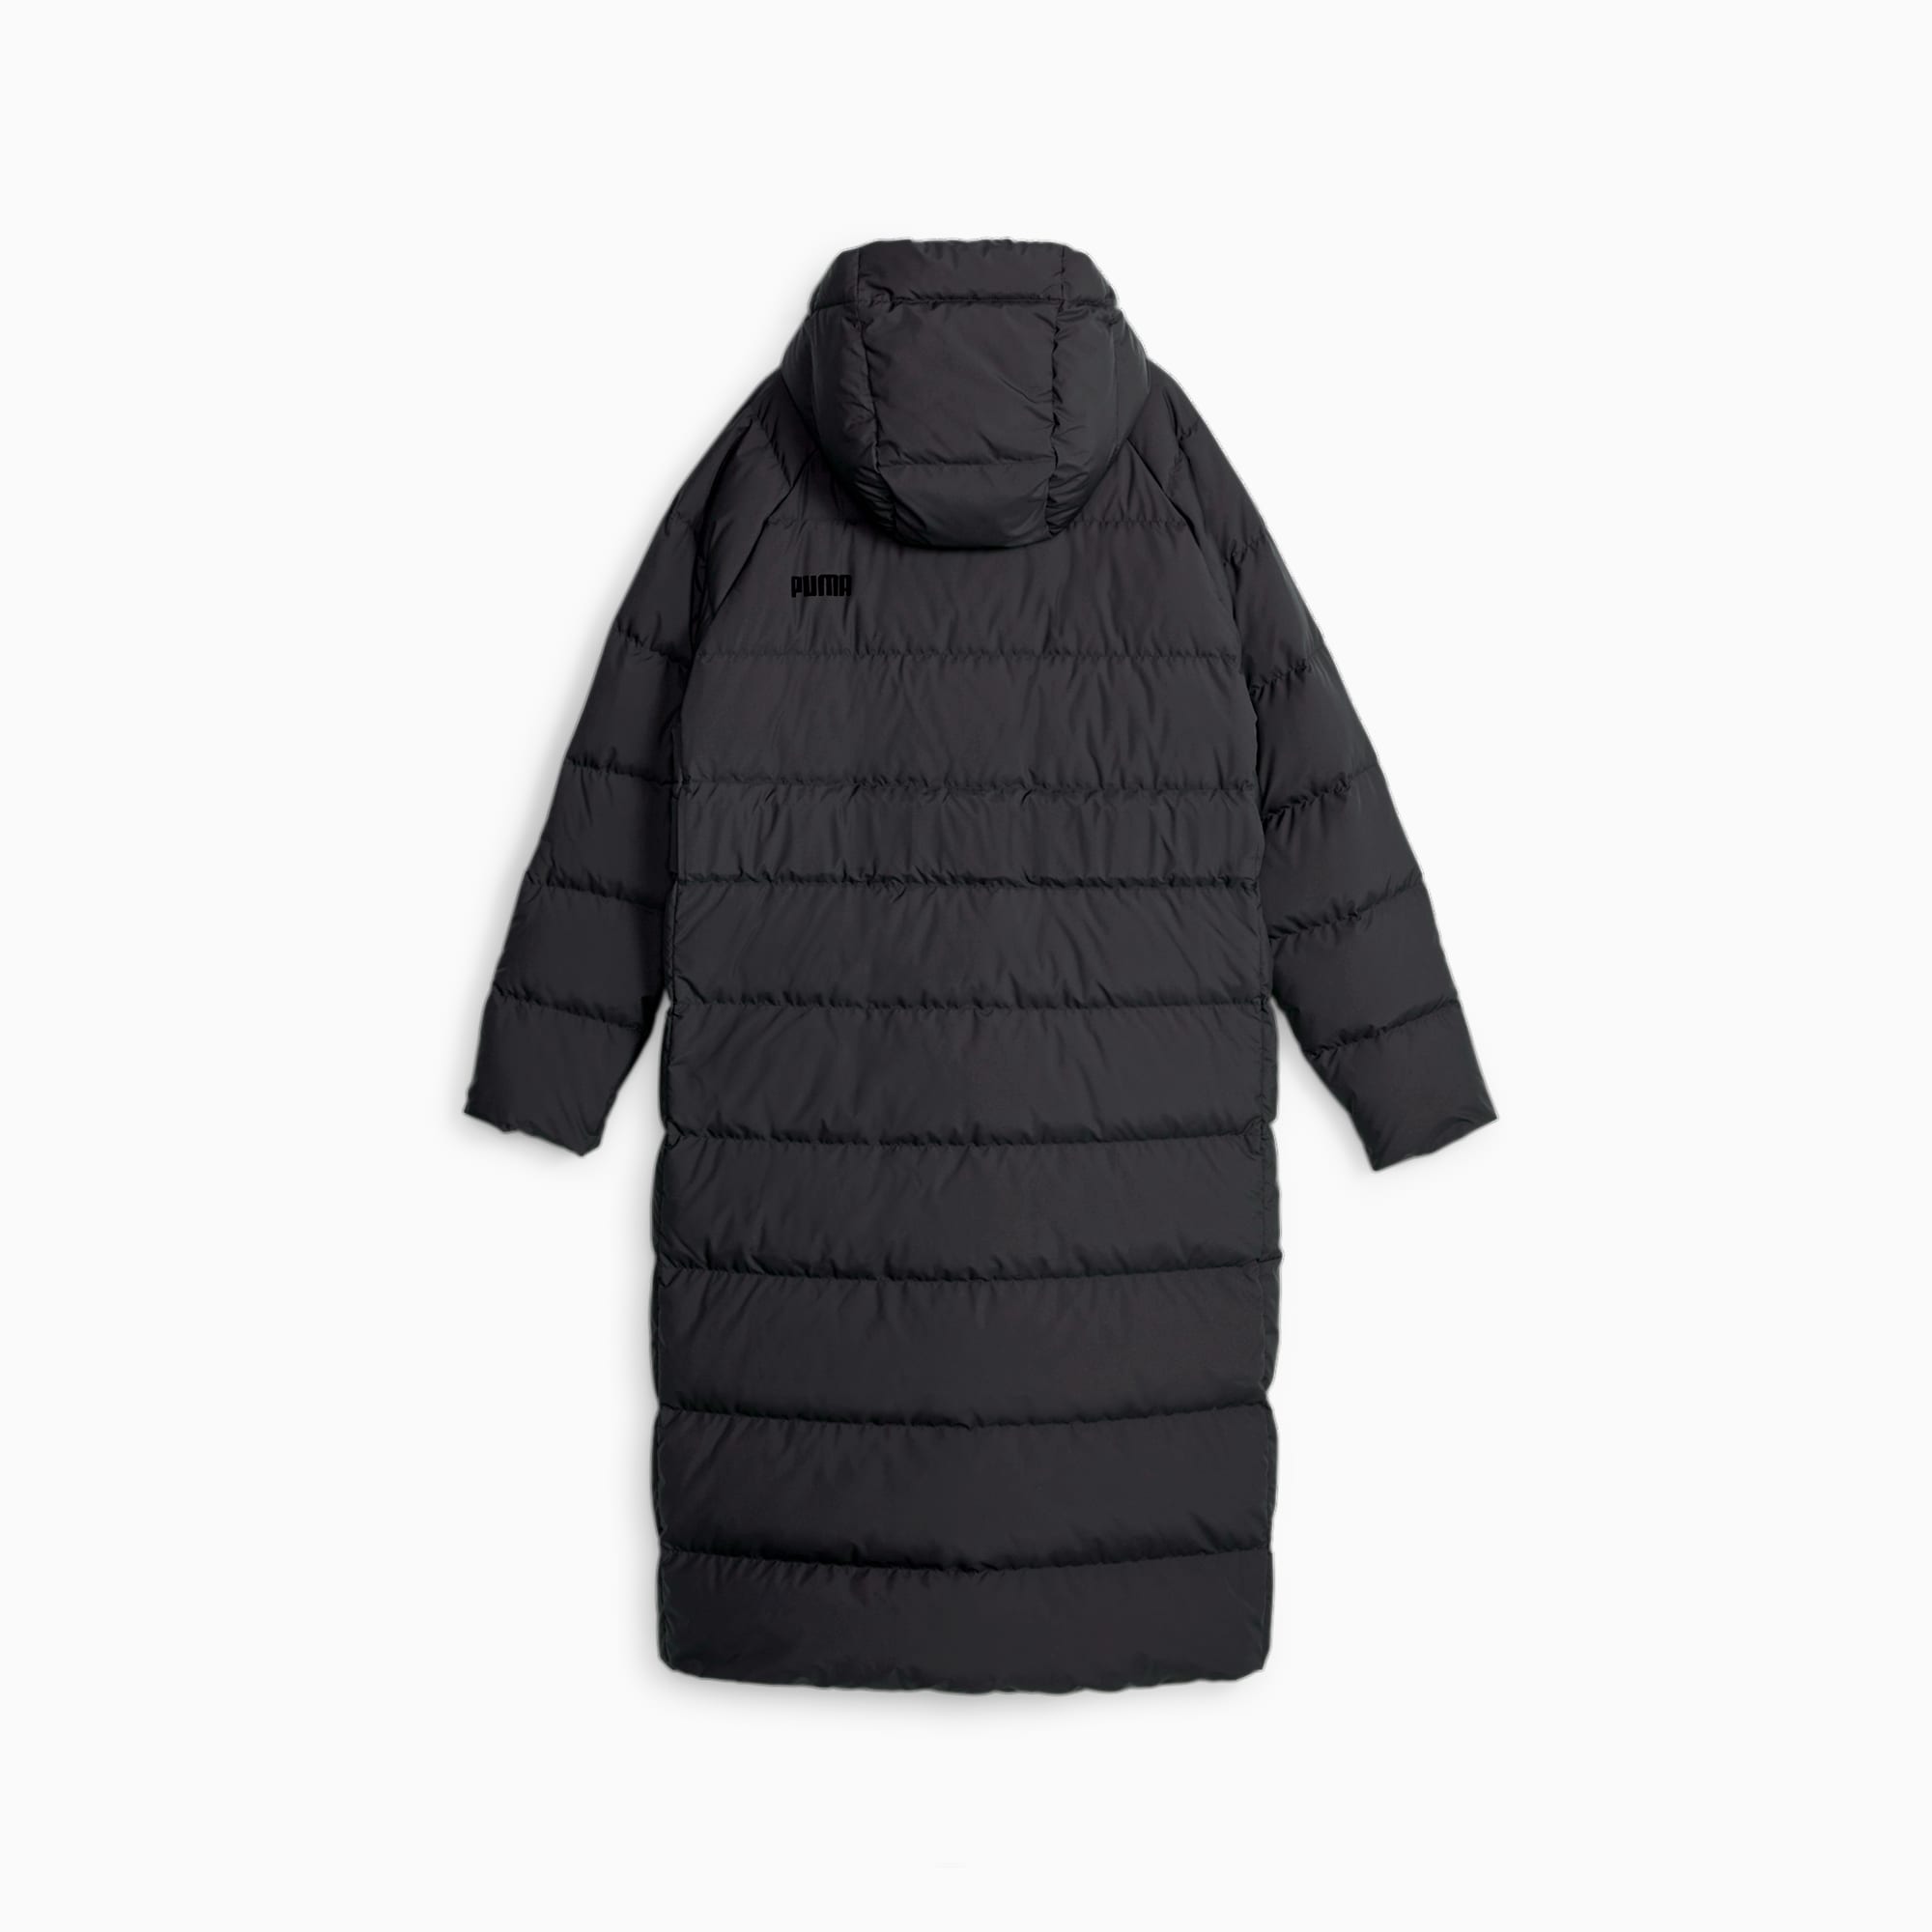 PUMA Women's Long Hooded Down Coat, Black